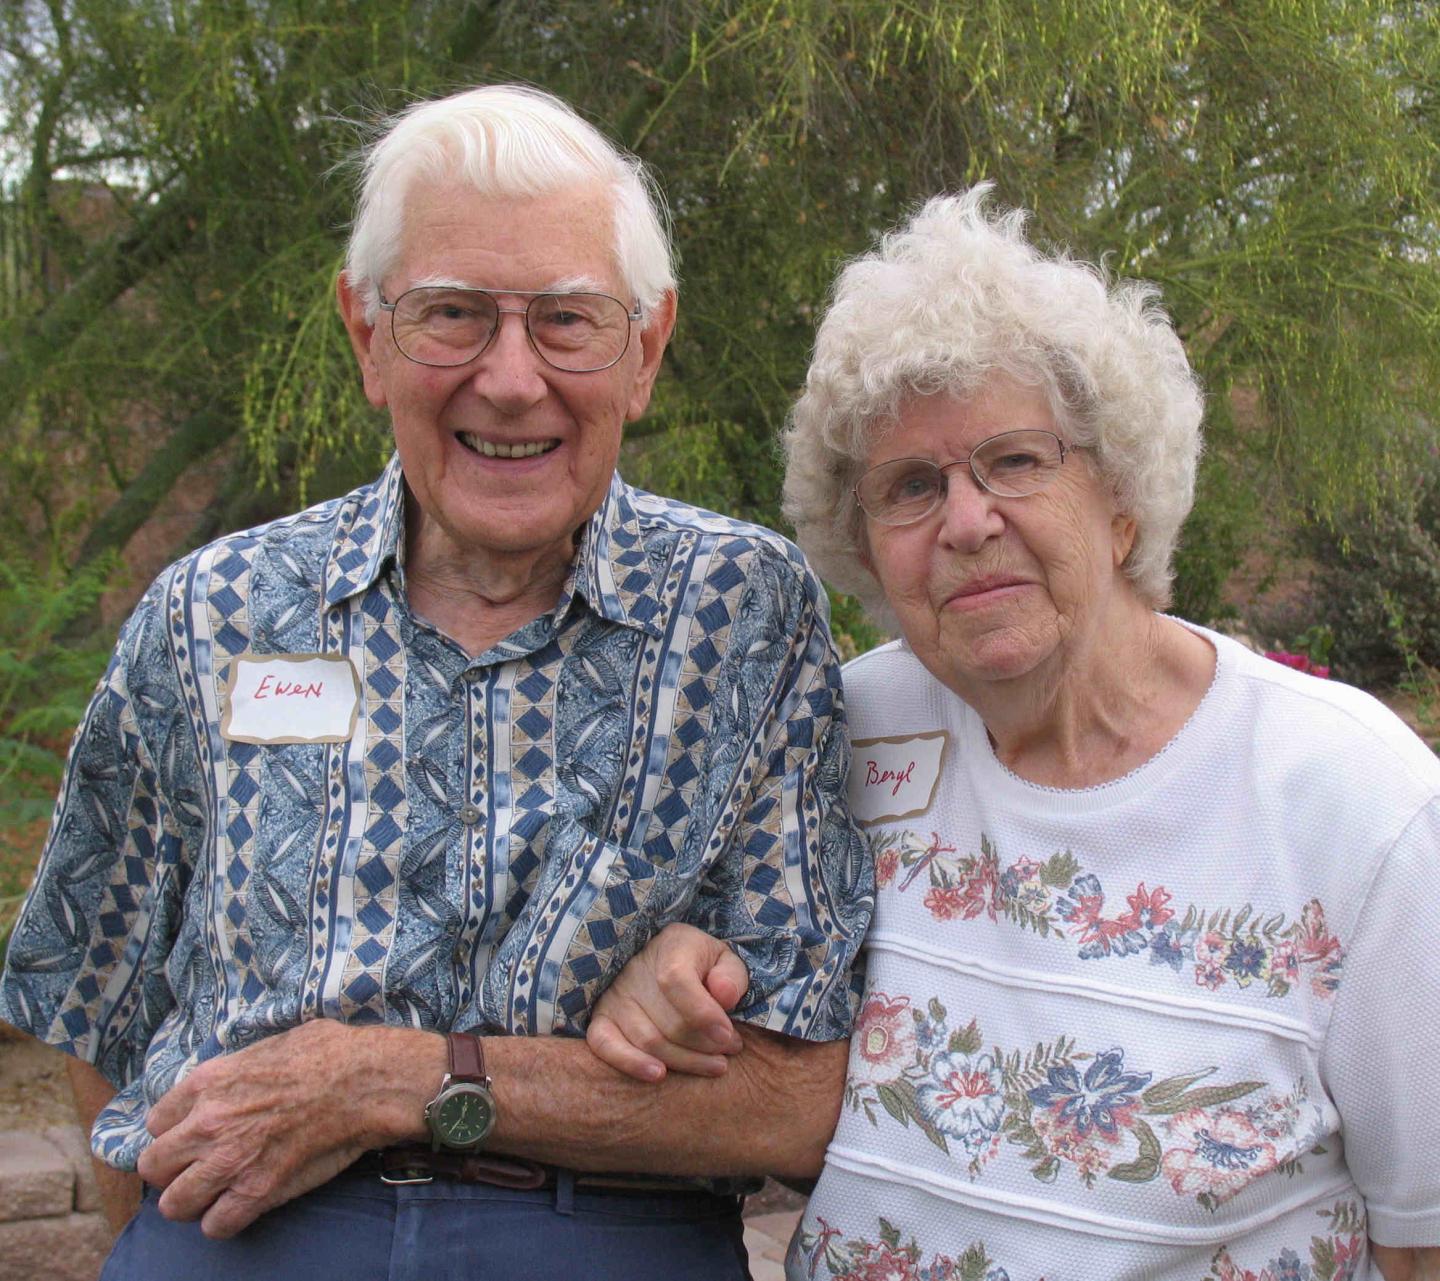 Ewen and Beryl Whitaker, photograph courtesy of Dale Cruikshank